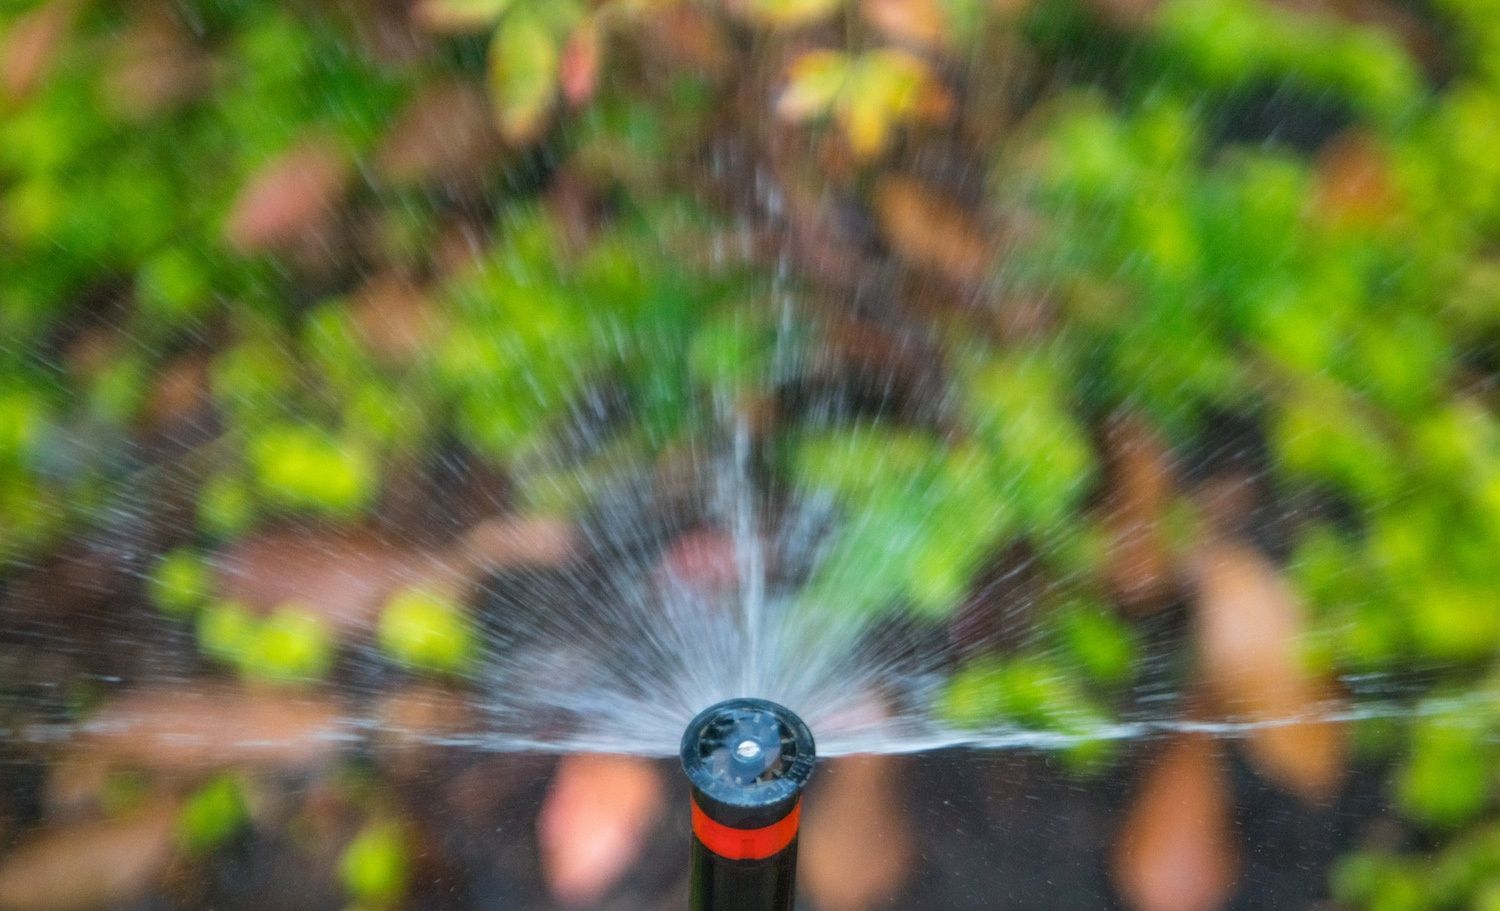 irrigation sprinkler head